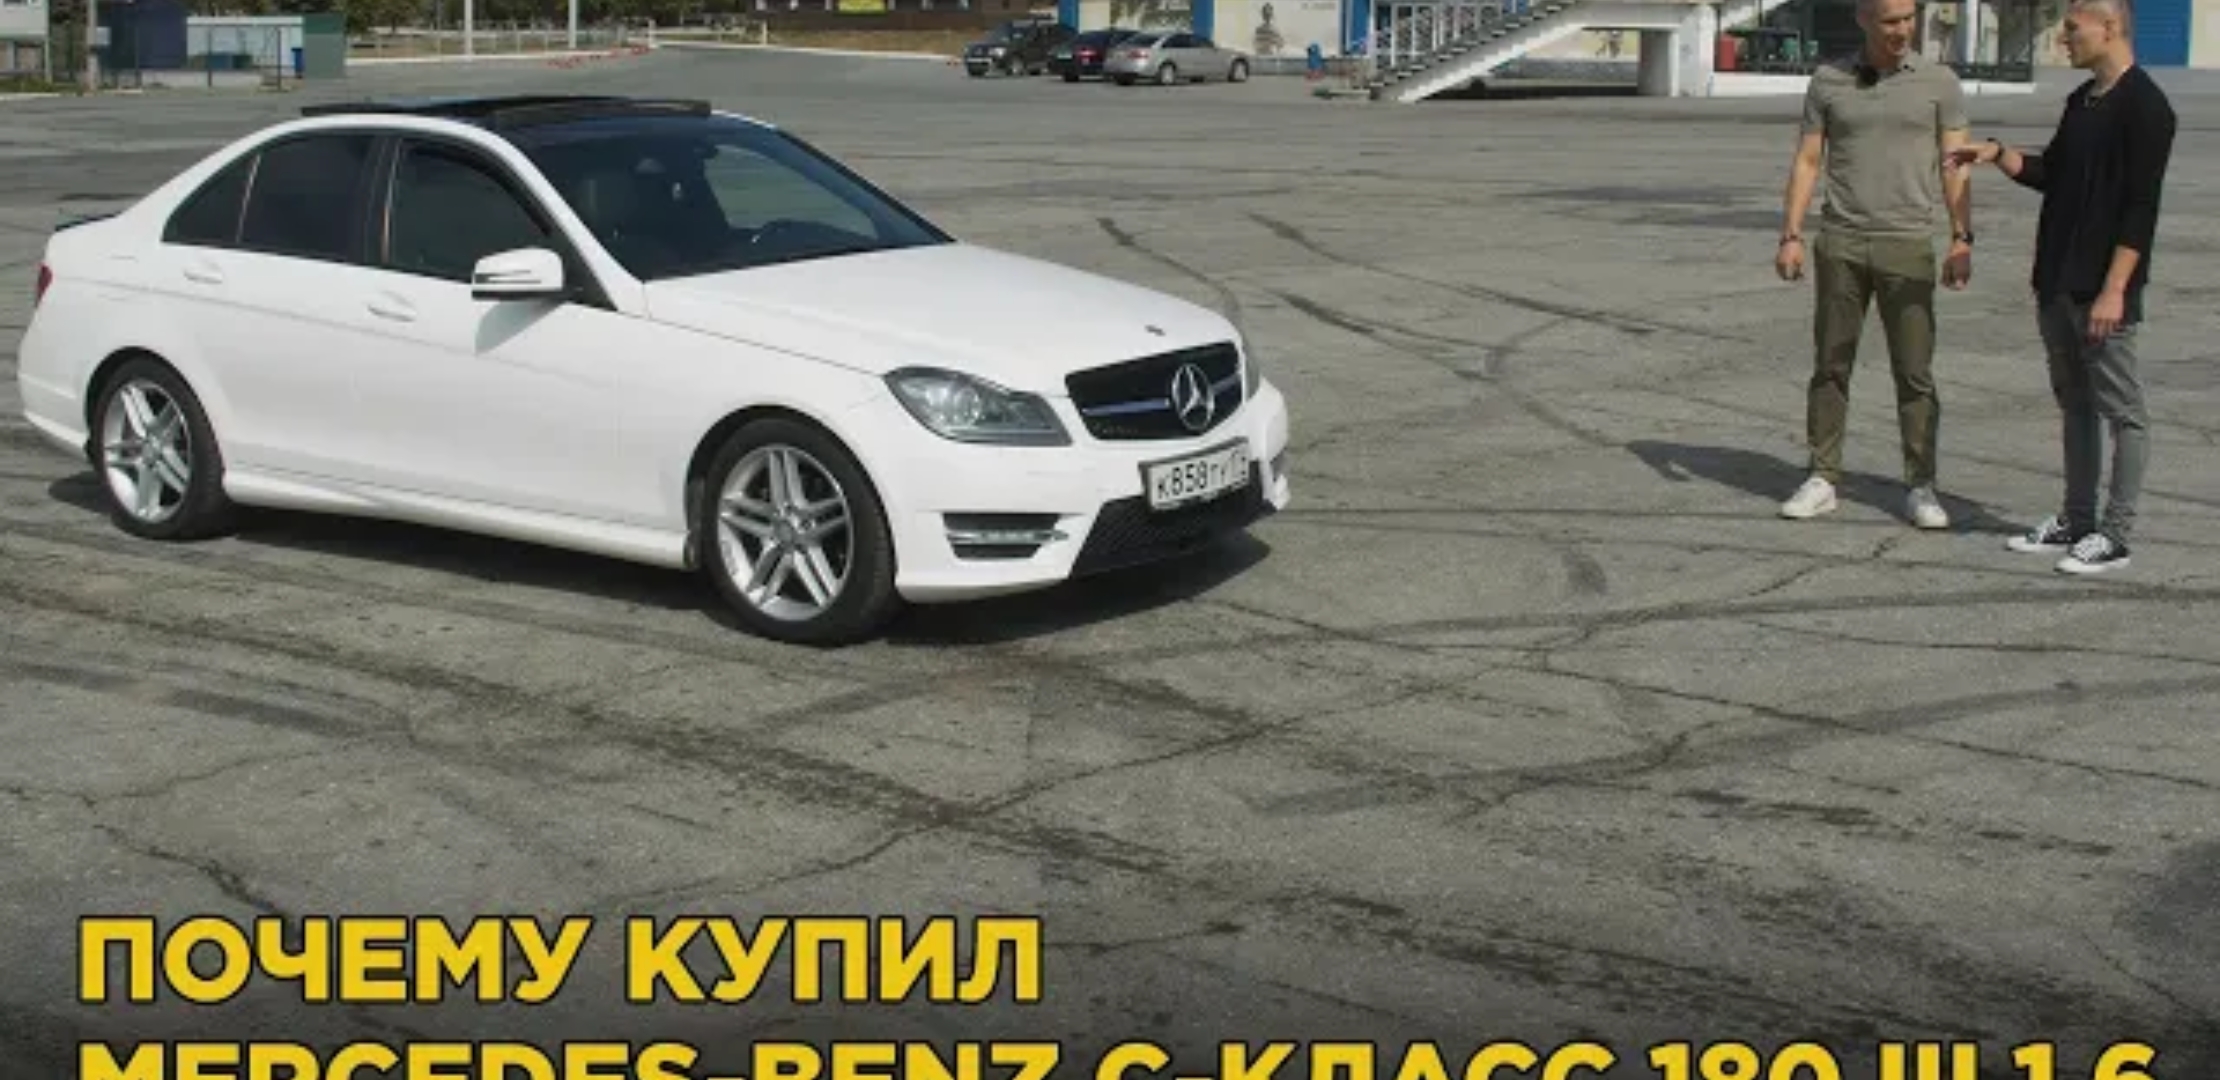 Анонс видео-теста Почему купил Mercedes-Benz C-Класс 180 III 1.6 AMG. 